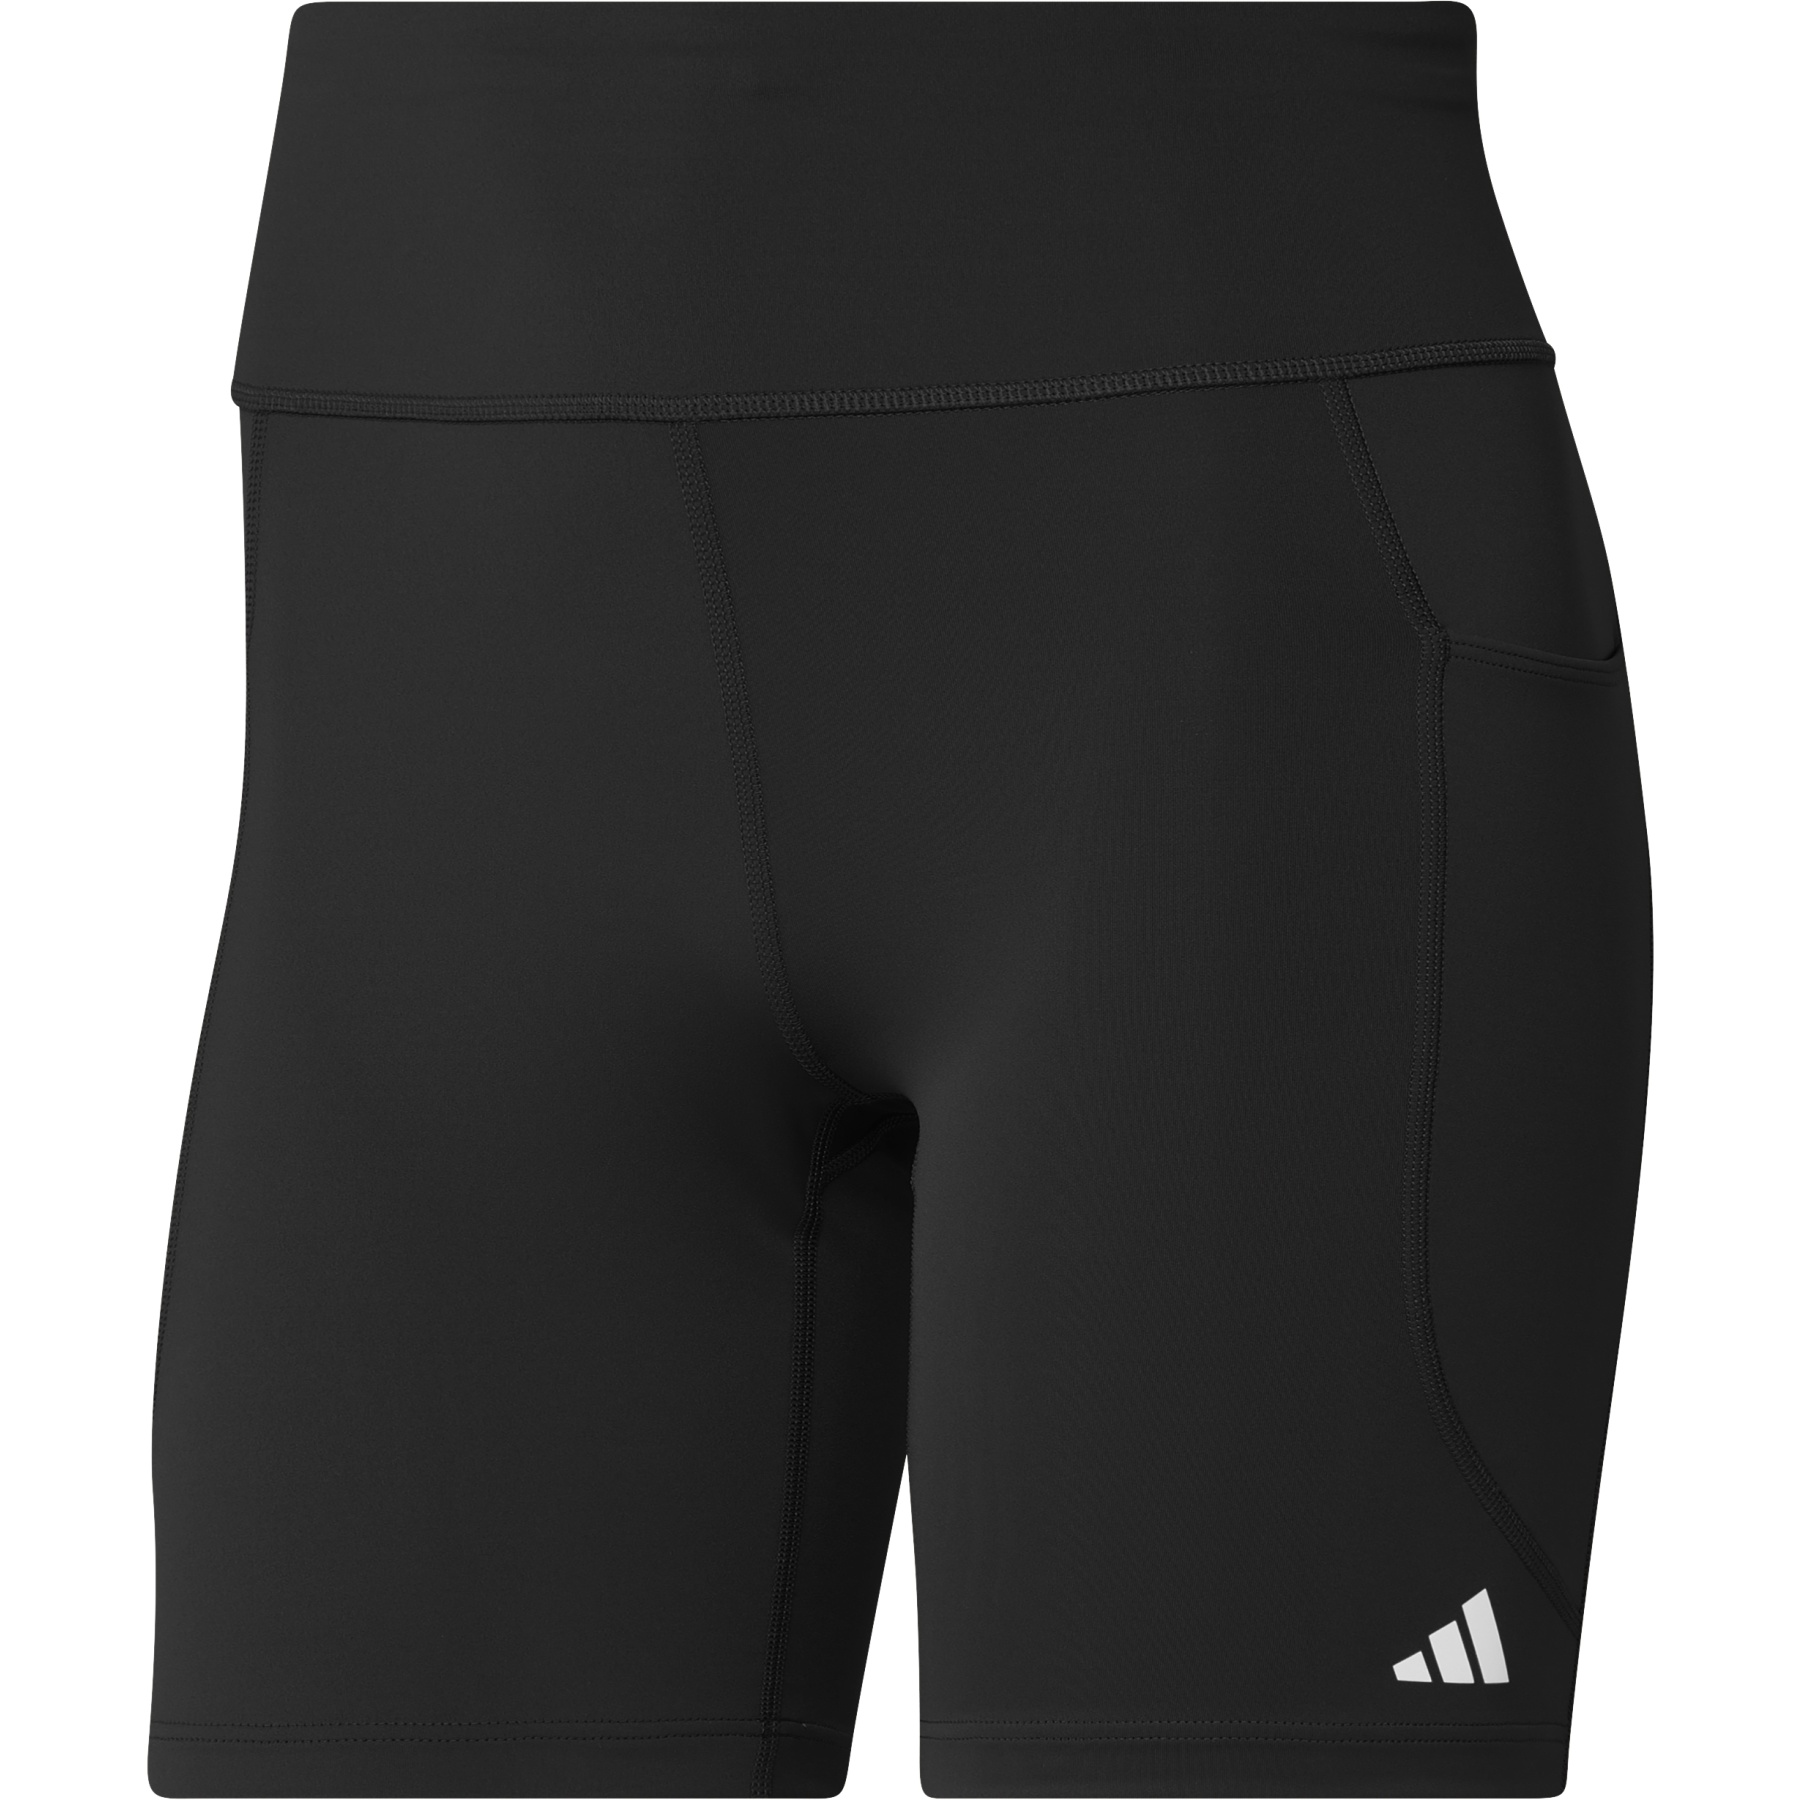 Image of adidas Dailyrun 5" Shorts Women - black/white IU1655